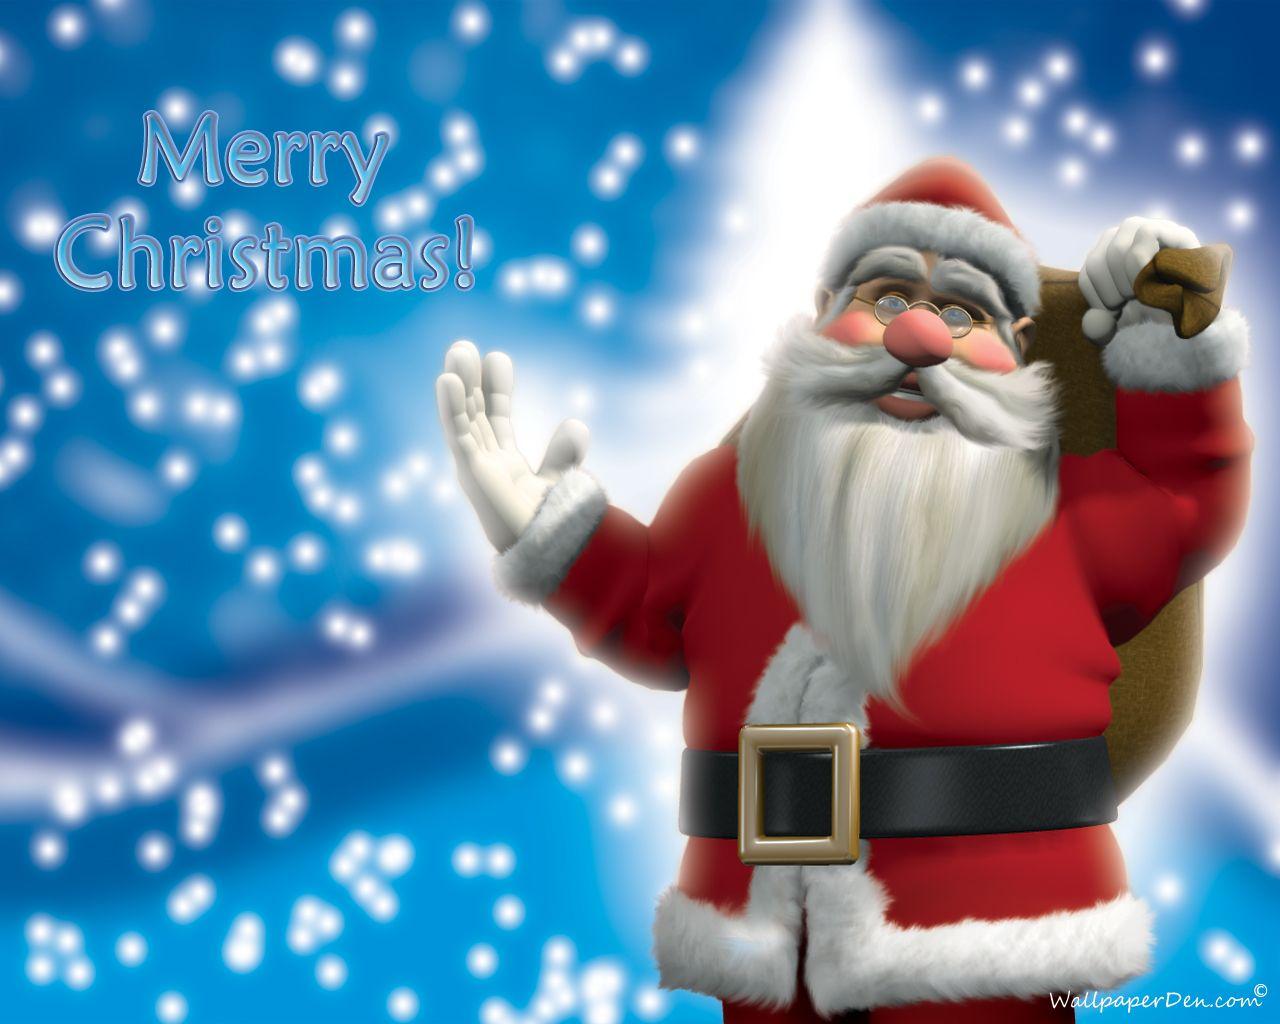 Best}* Merry Xmas Christmas 2017 Funny MEMES & Santa Claus Image